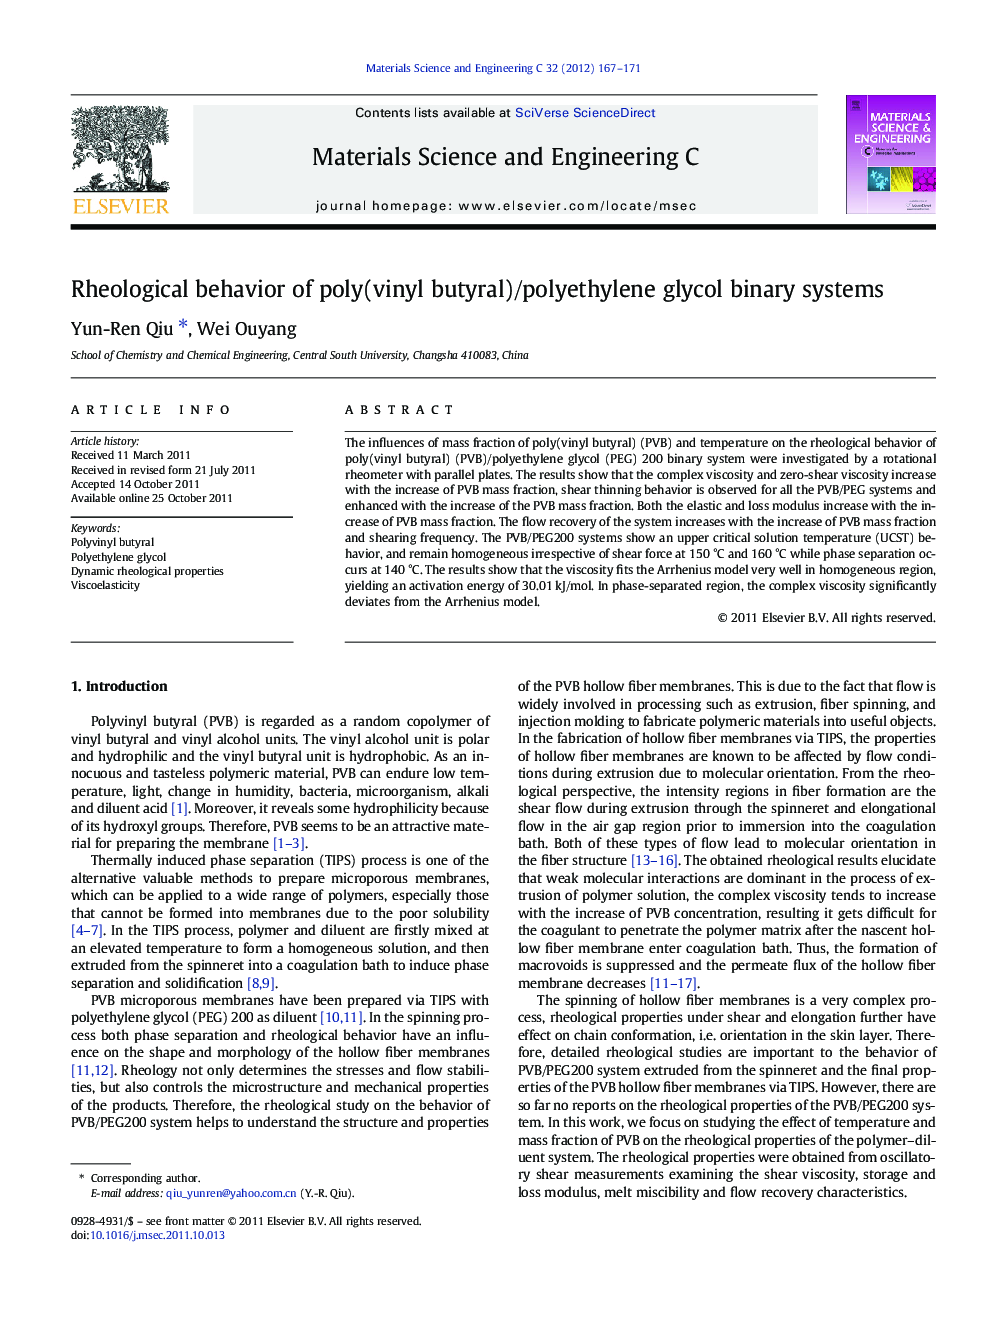 Rheological behavior of poly(vinyl butyral)/polyethylene glycol binary systems